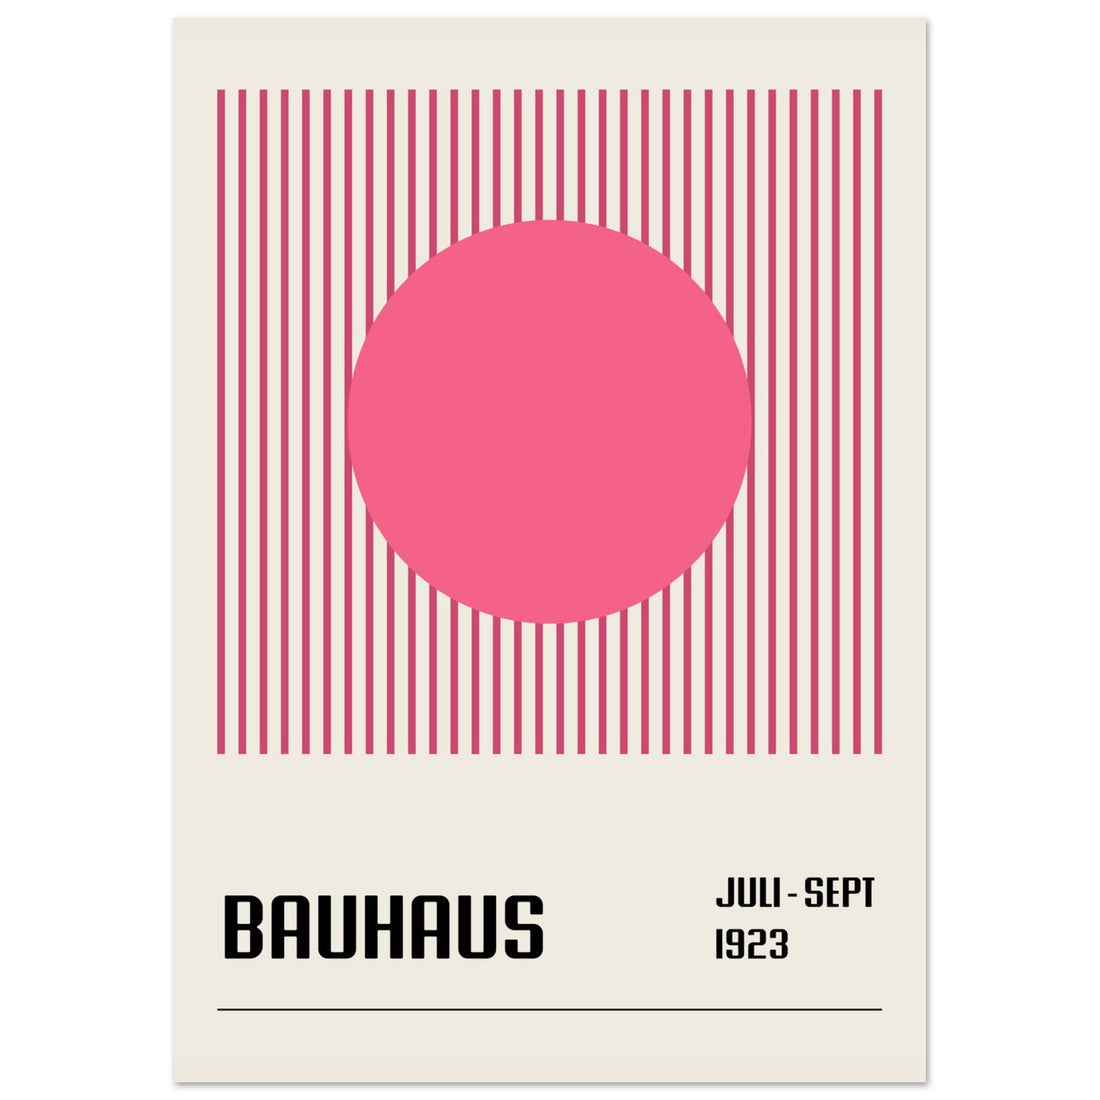 Art Deco - Pink Bauhaus Poster, No. 115 Art Print, abstract, architecture, design, #illieeart